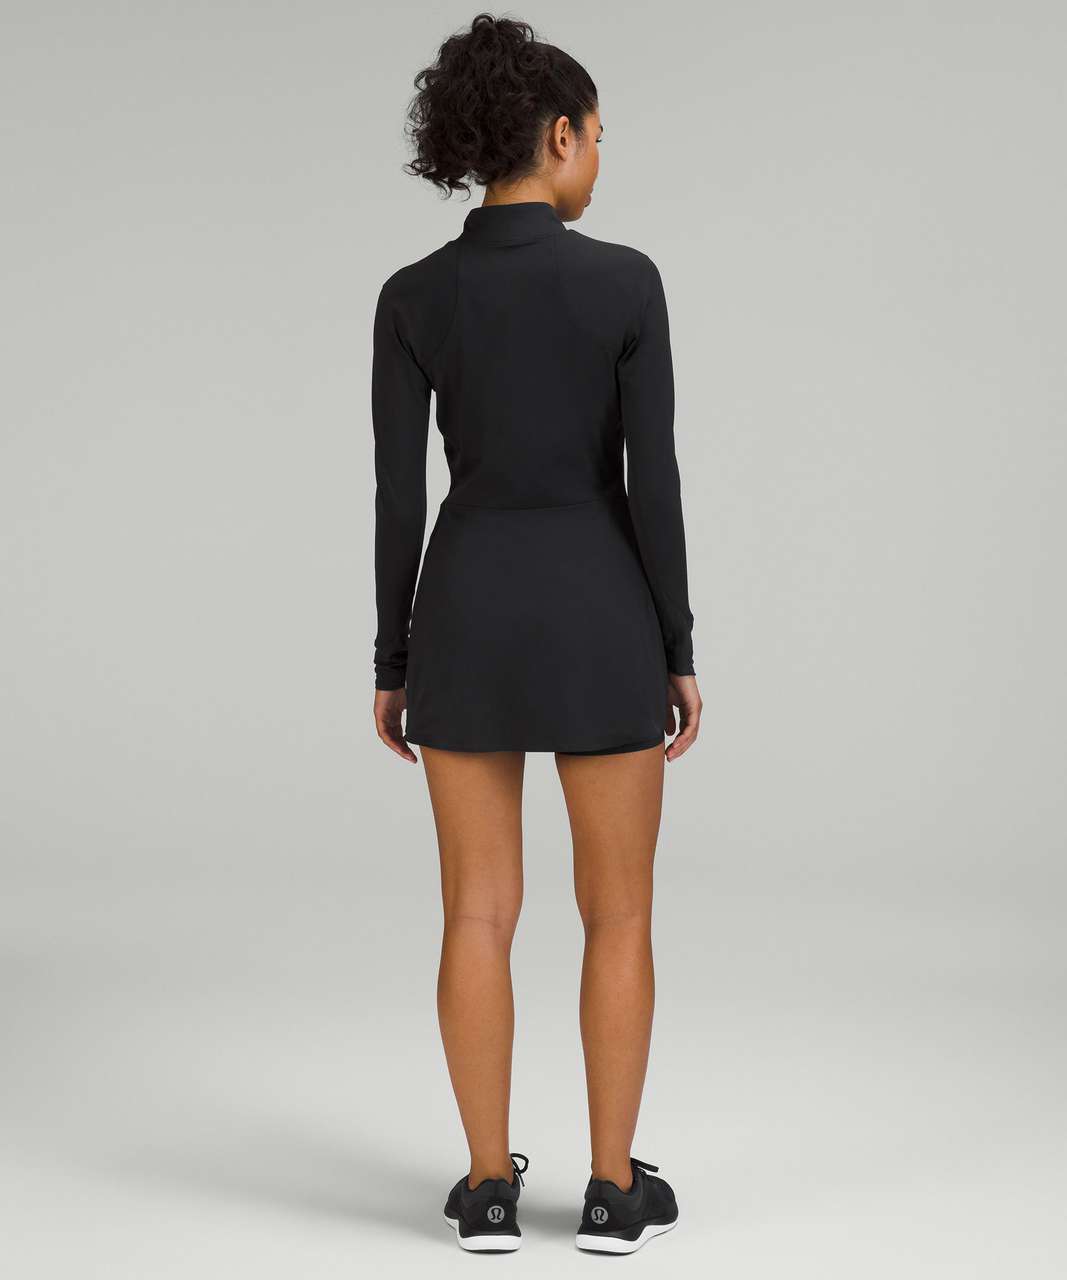 Lululemon Nulux Long-Sleeve Tennis Dress - Black